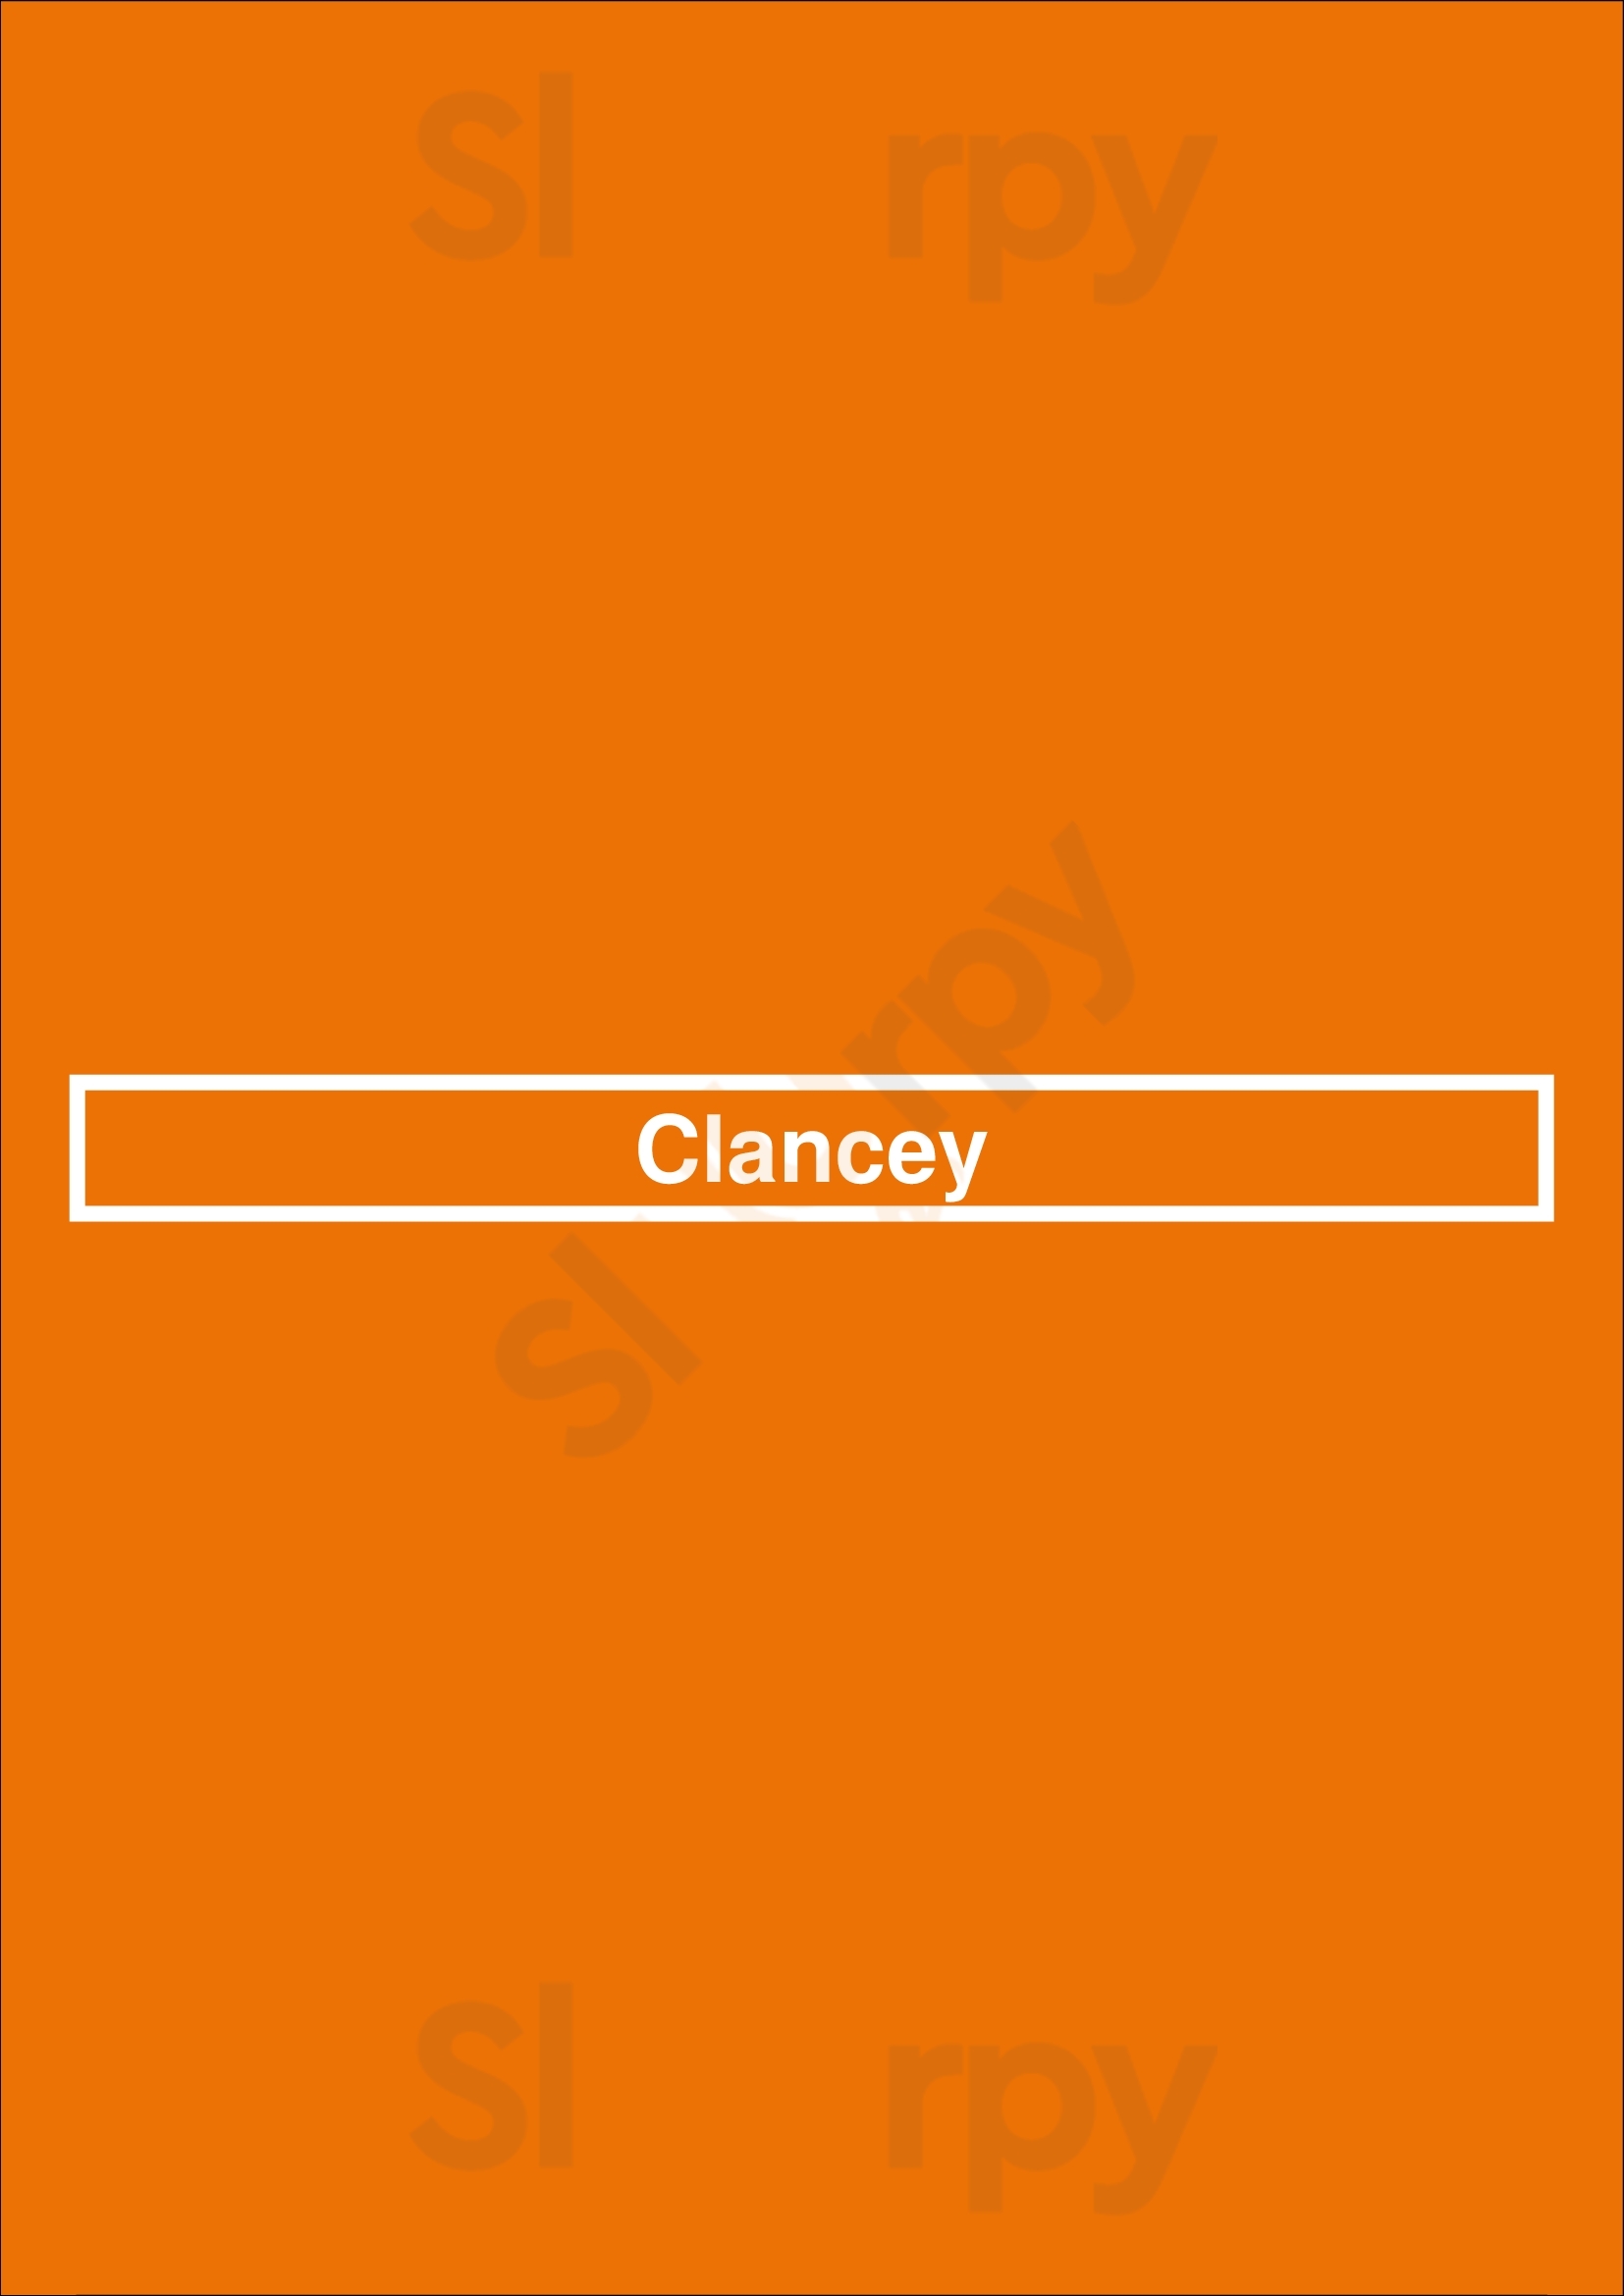 Clancey New York City Menu - 1